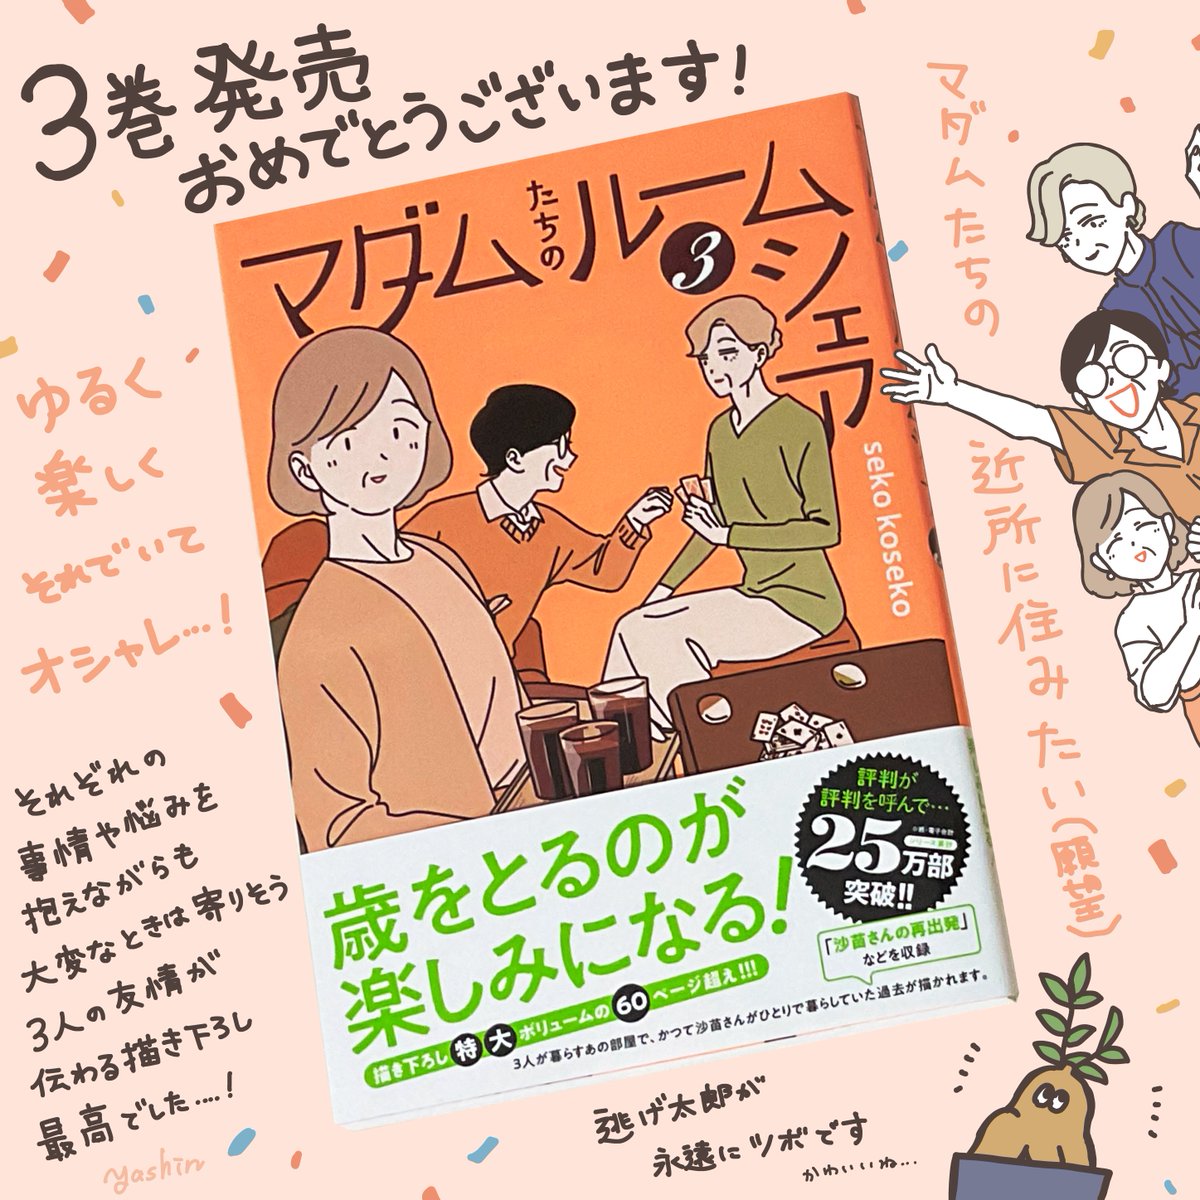 seko koseko先生(@sekokoseko )より『マダムたちのルームシェア』3巻をご恵贈いただきました🌷

ライフステージが変わっても、寄り添って悩みや楽しさを共有できる友達がいるって素晴らしい…!

いつもの暮らしぶりだけでなく、3人の友情にも憧れるお話もあり最高でした✨
#マダムたちのルームシェア 